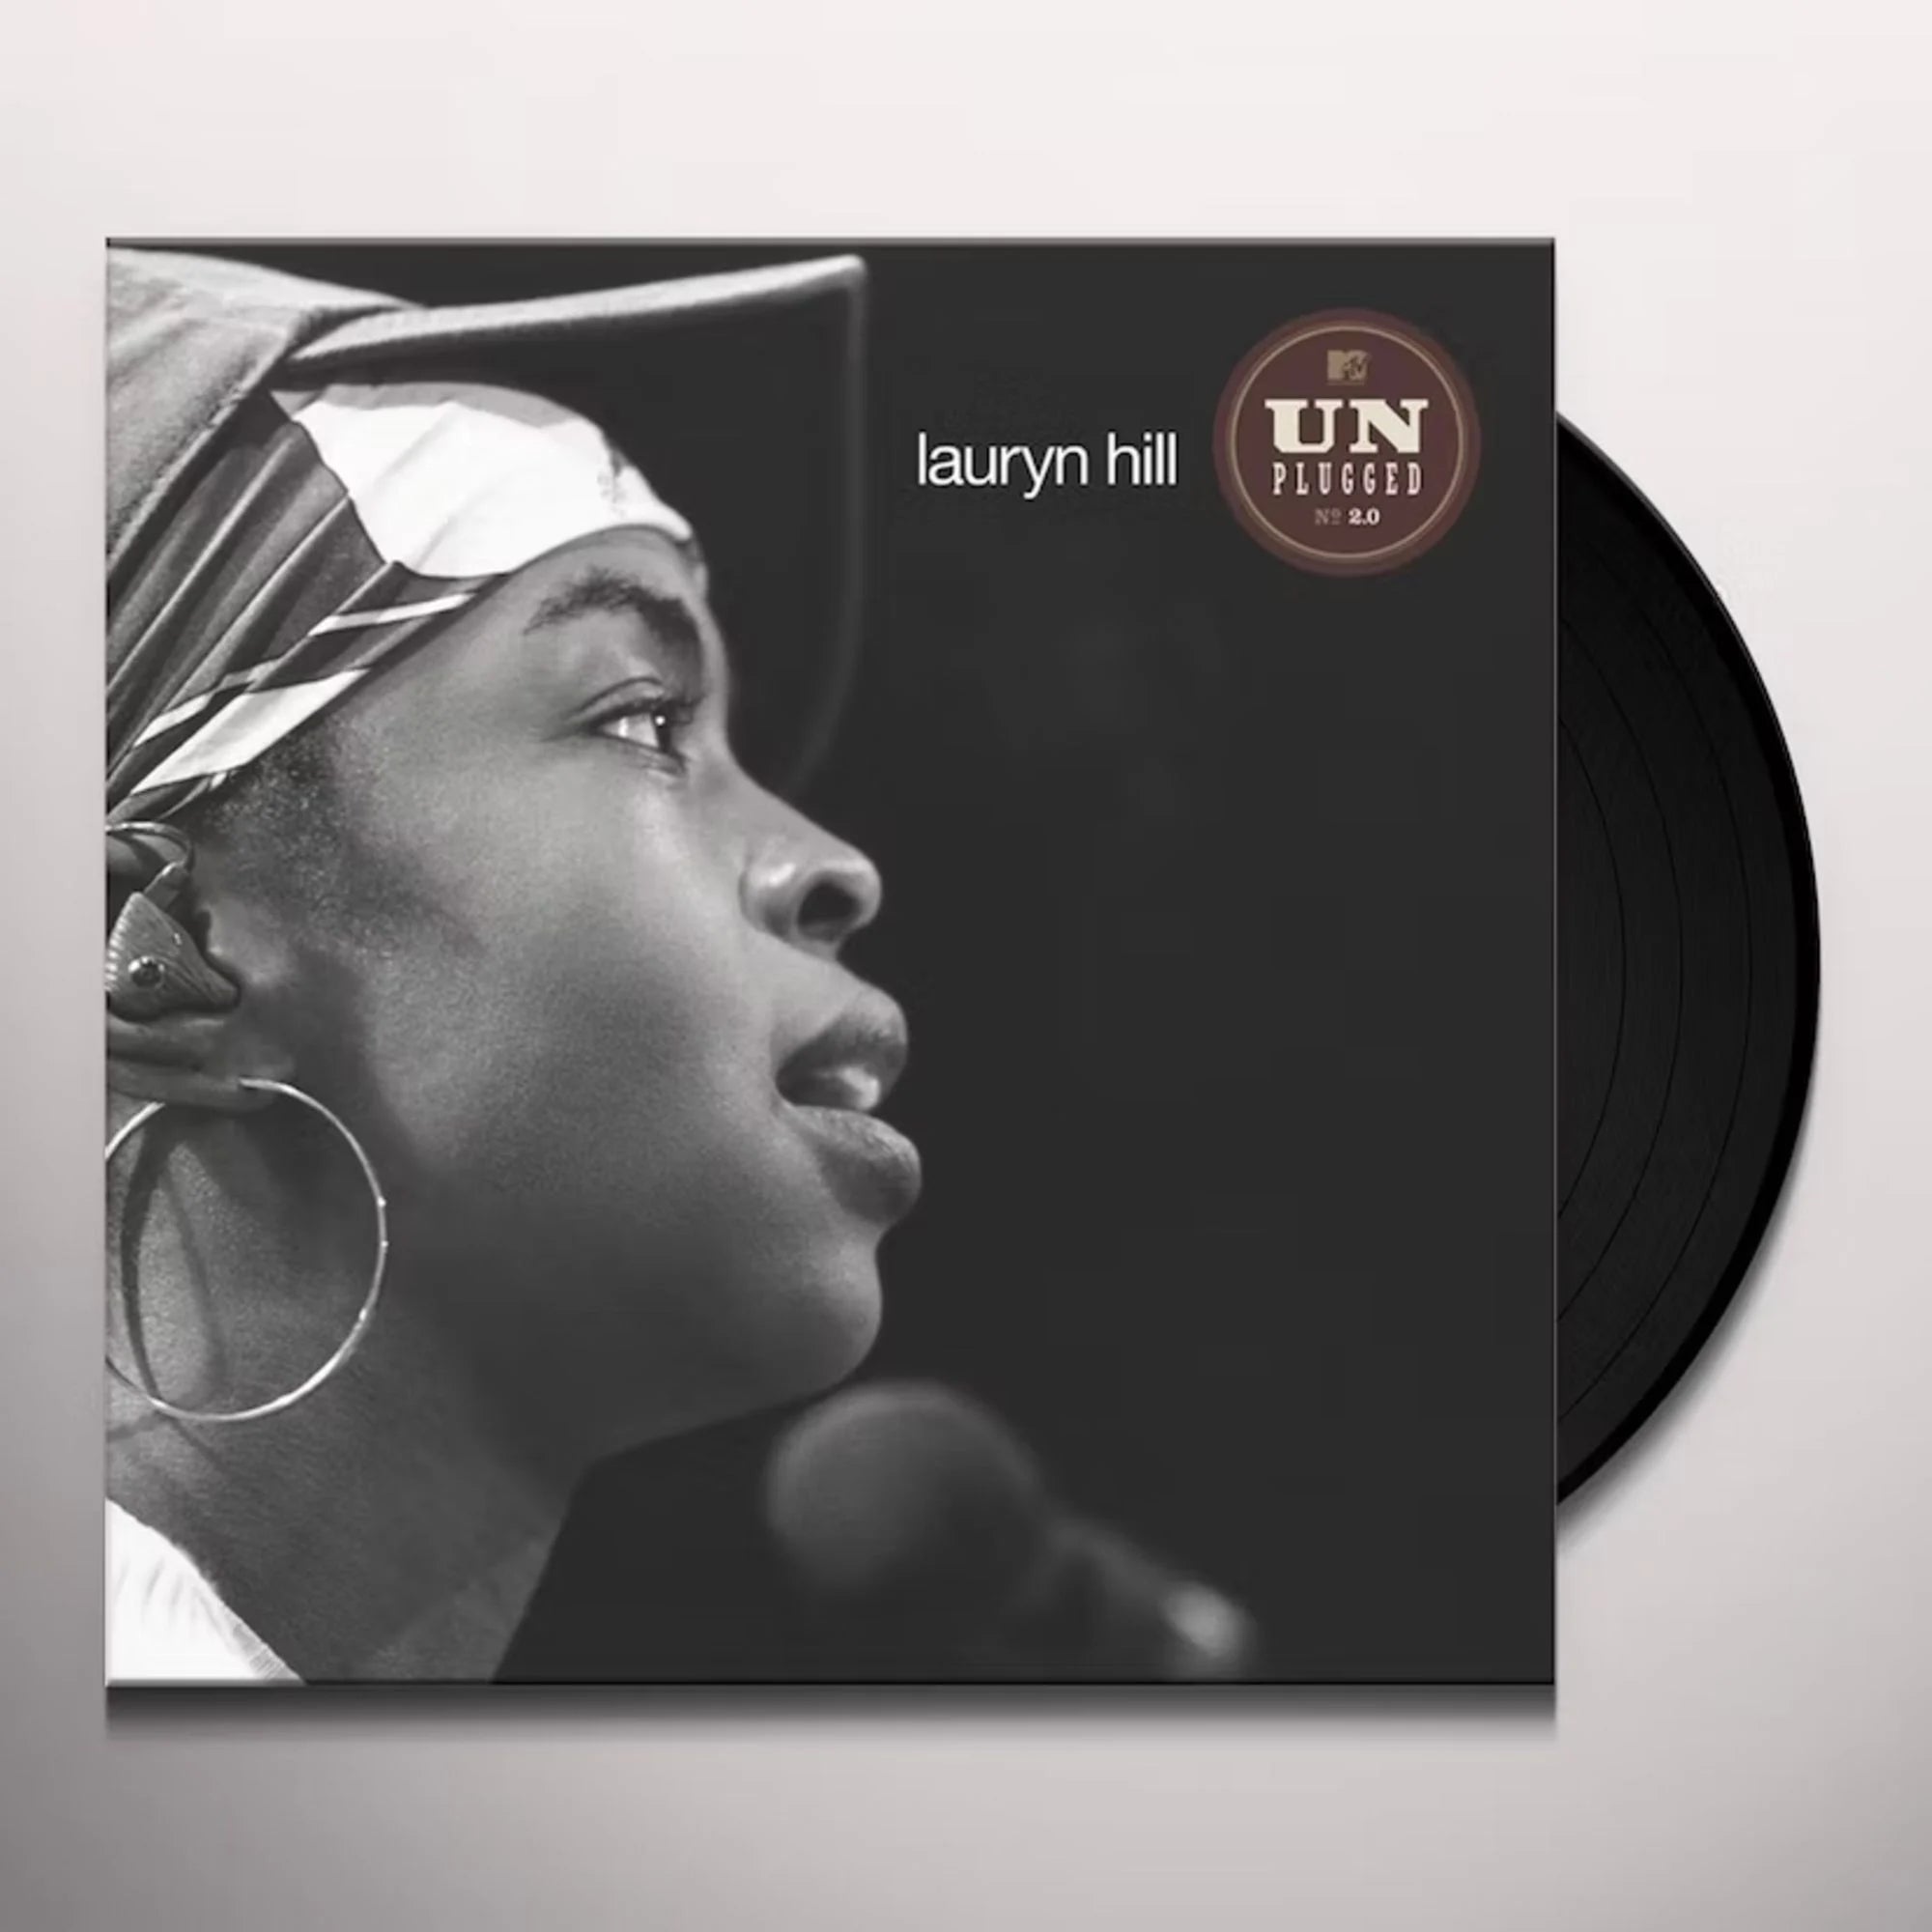 Lauryn Hill - MTV Unplugged No. 2.0: Vinyl LP